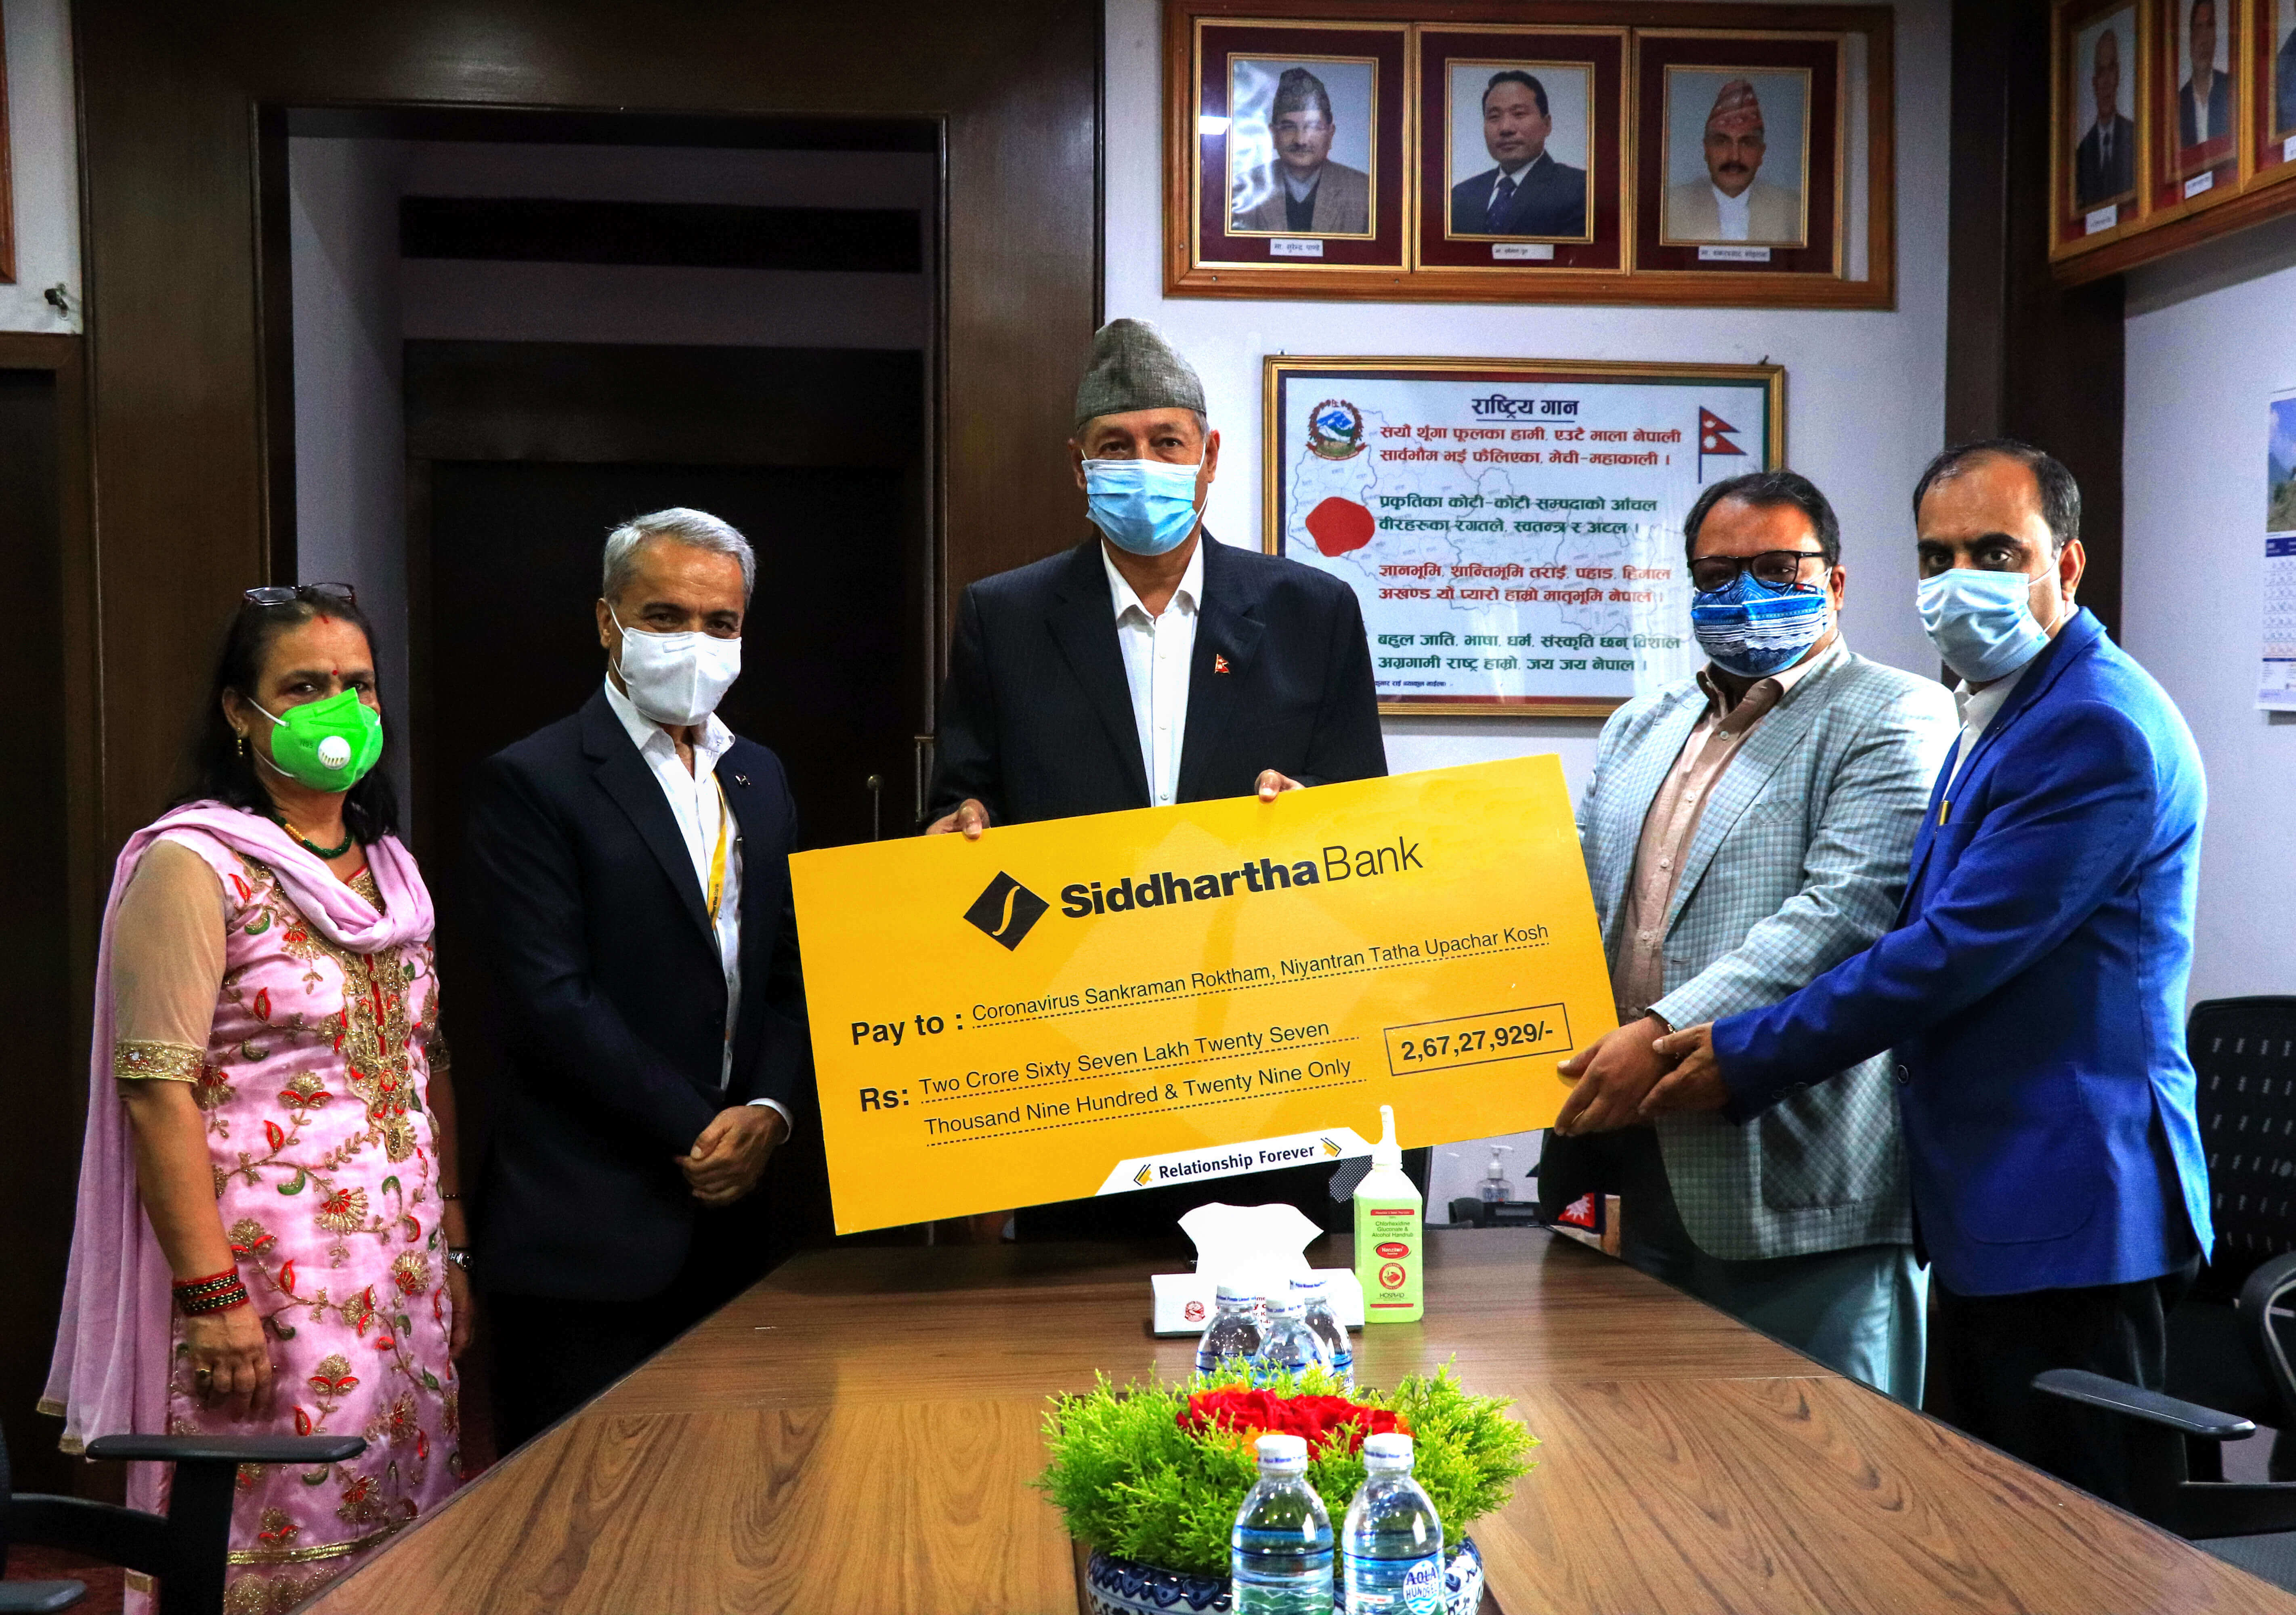 Financial Support to Coronavirus Sankraman Roktham Kosh